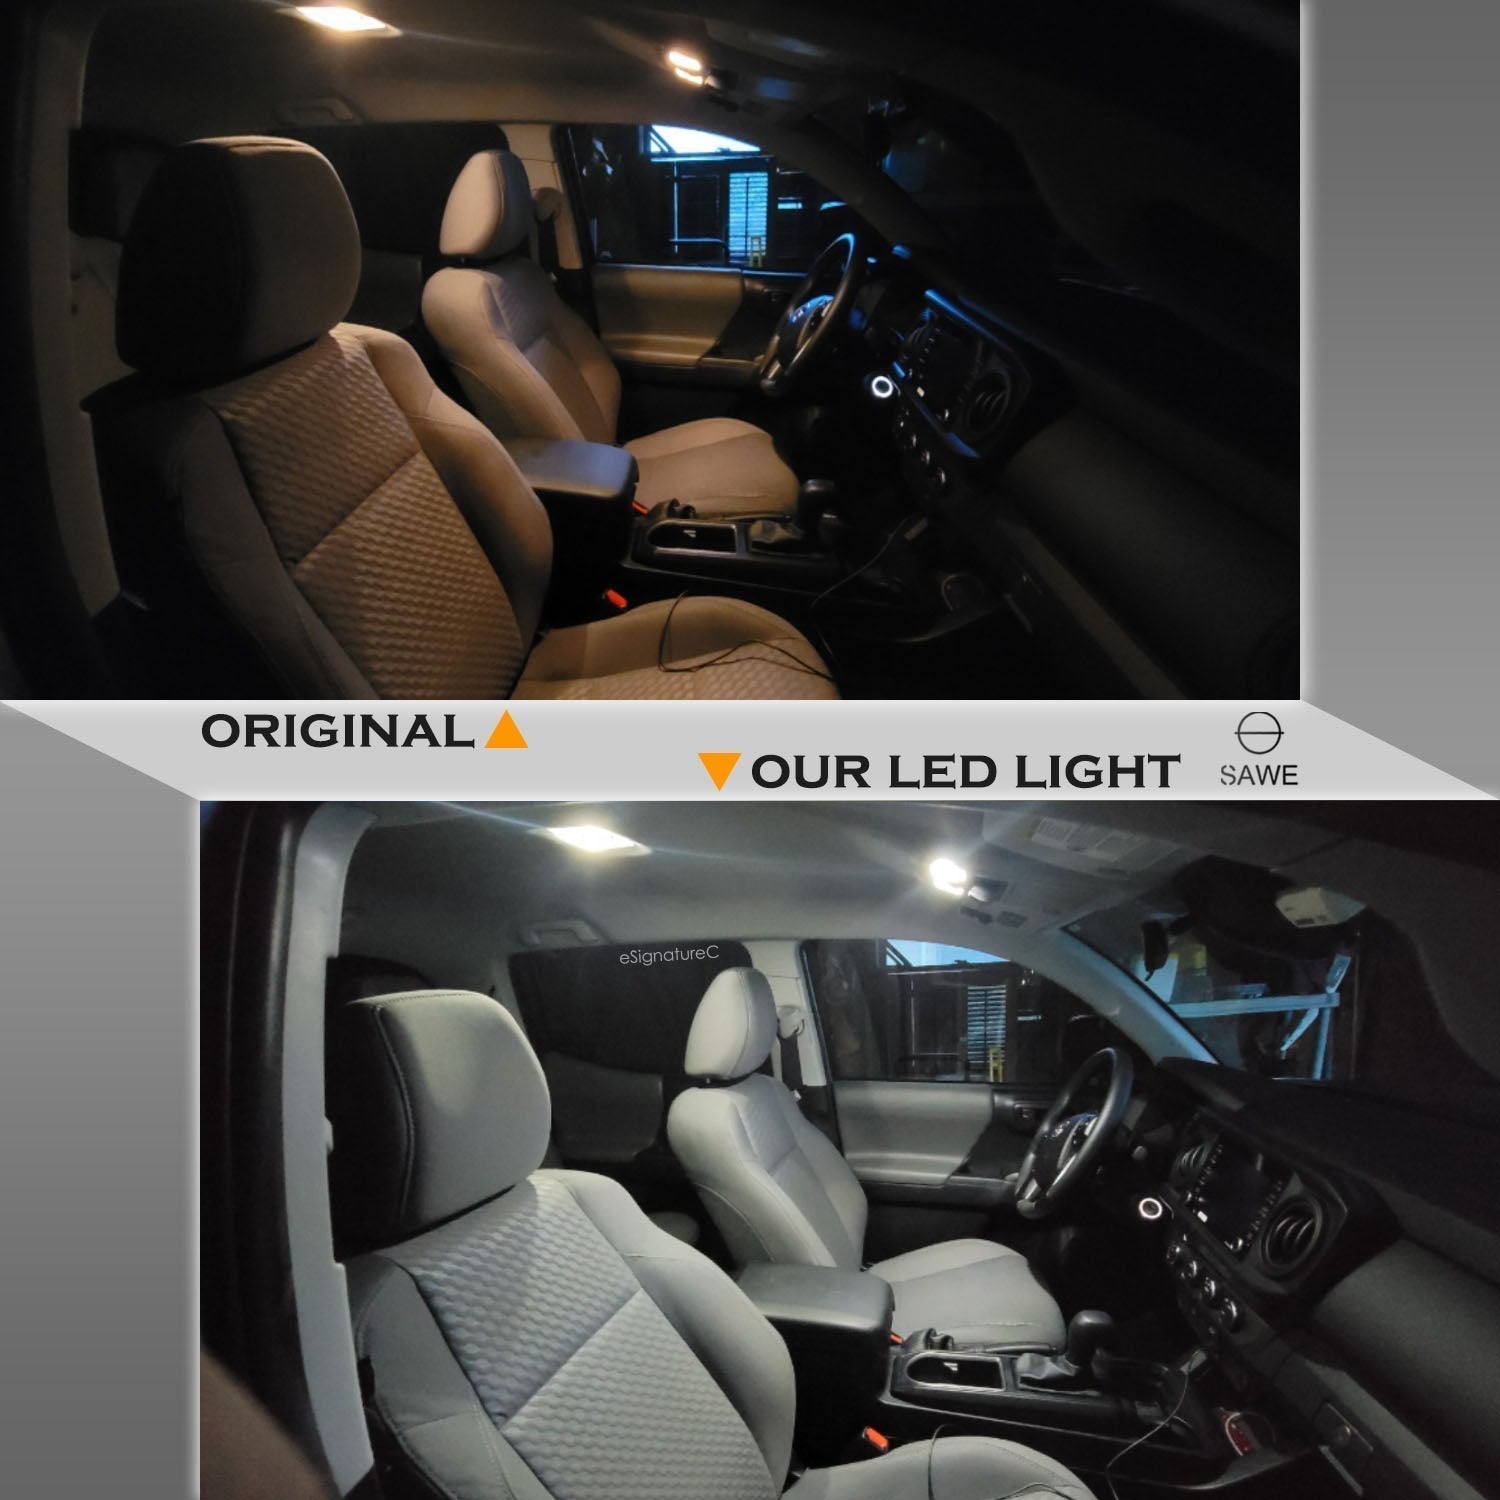 For Chevrolet Cavalier Interior LED Lights - Dome & Map Lights Package Kit for 1995 - 2005 - White